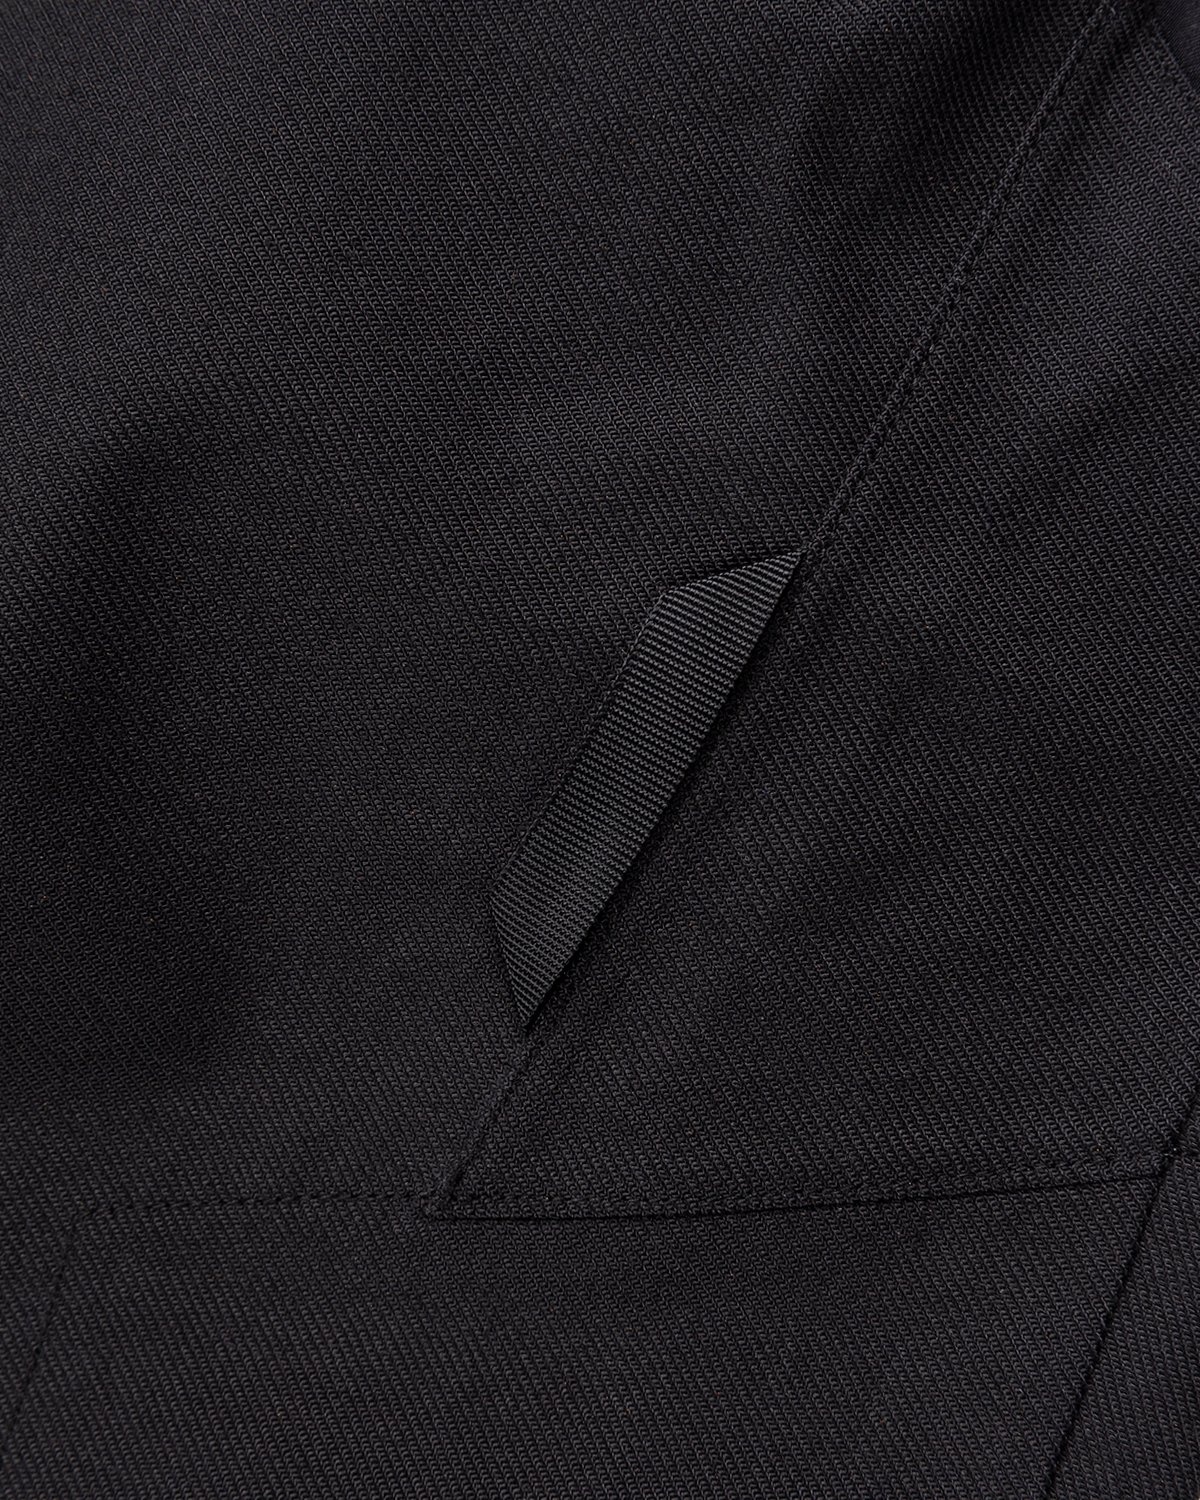 ACRONYM – J94-VT Black/Black - Outerwear - Black - Image 5